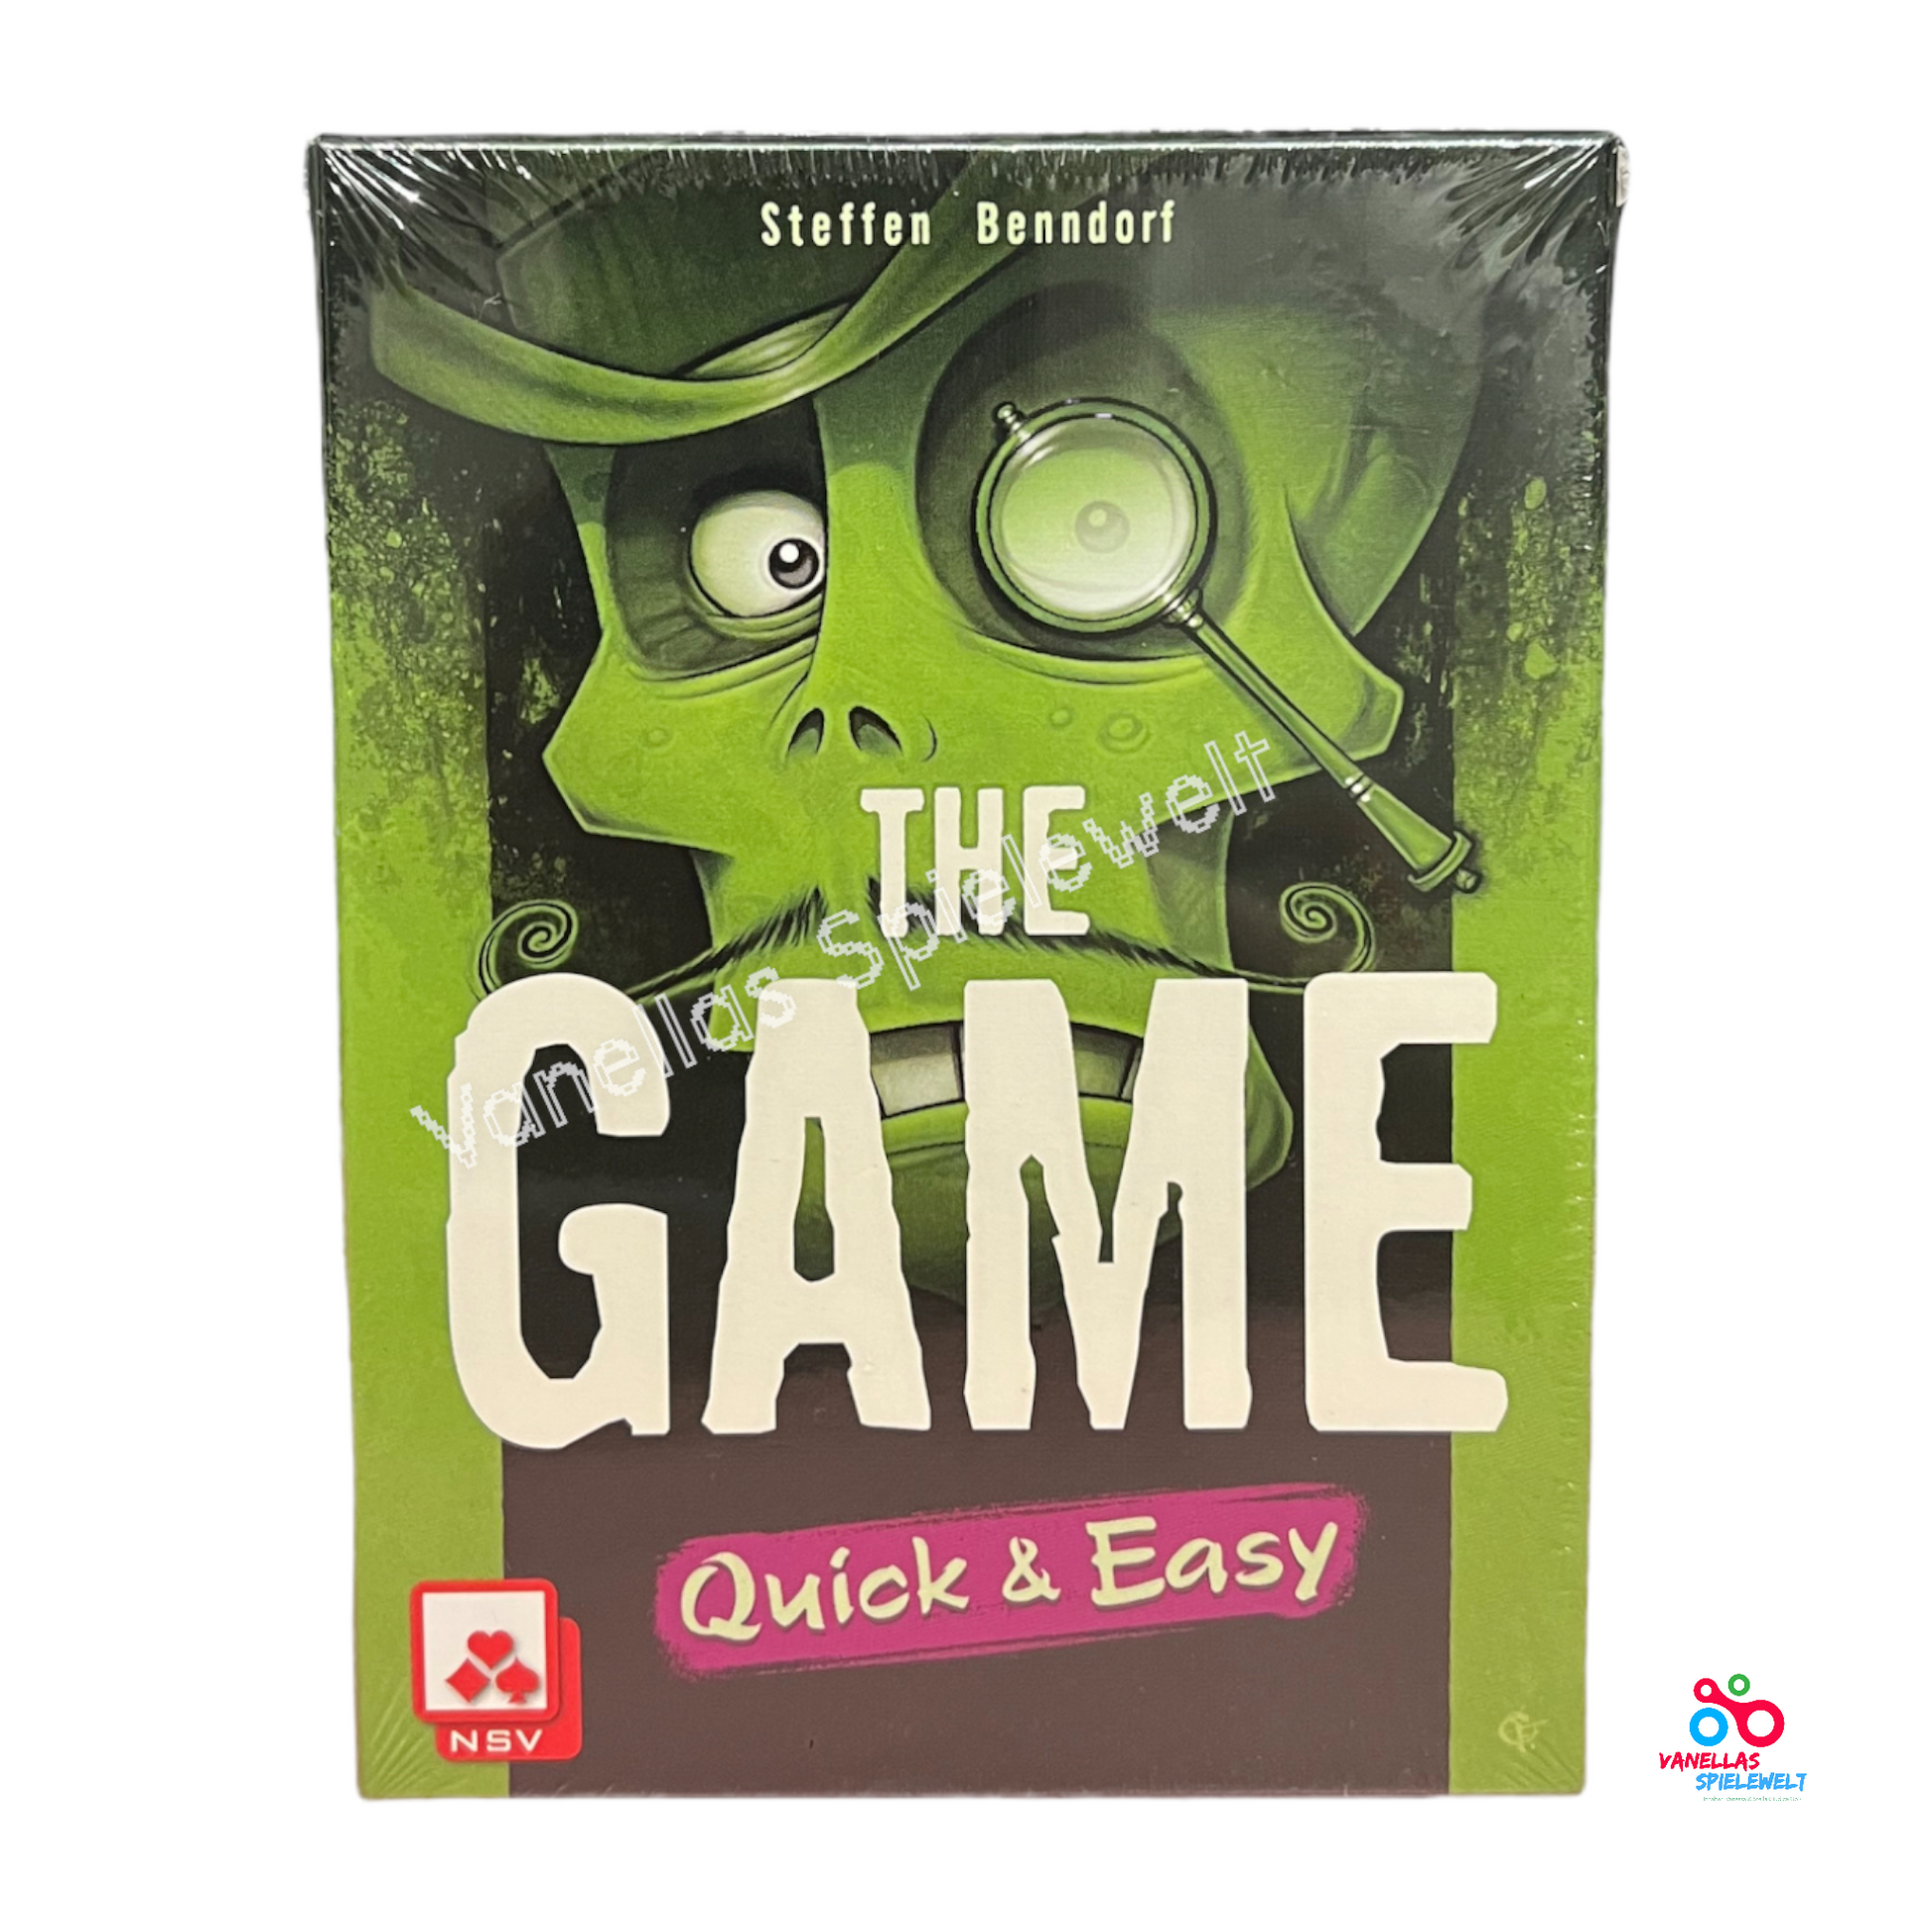 Spielkarten - The Game Quick and Easy Vanellas Spielewelt